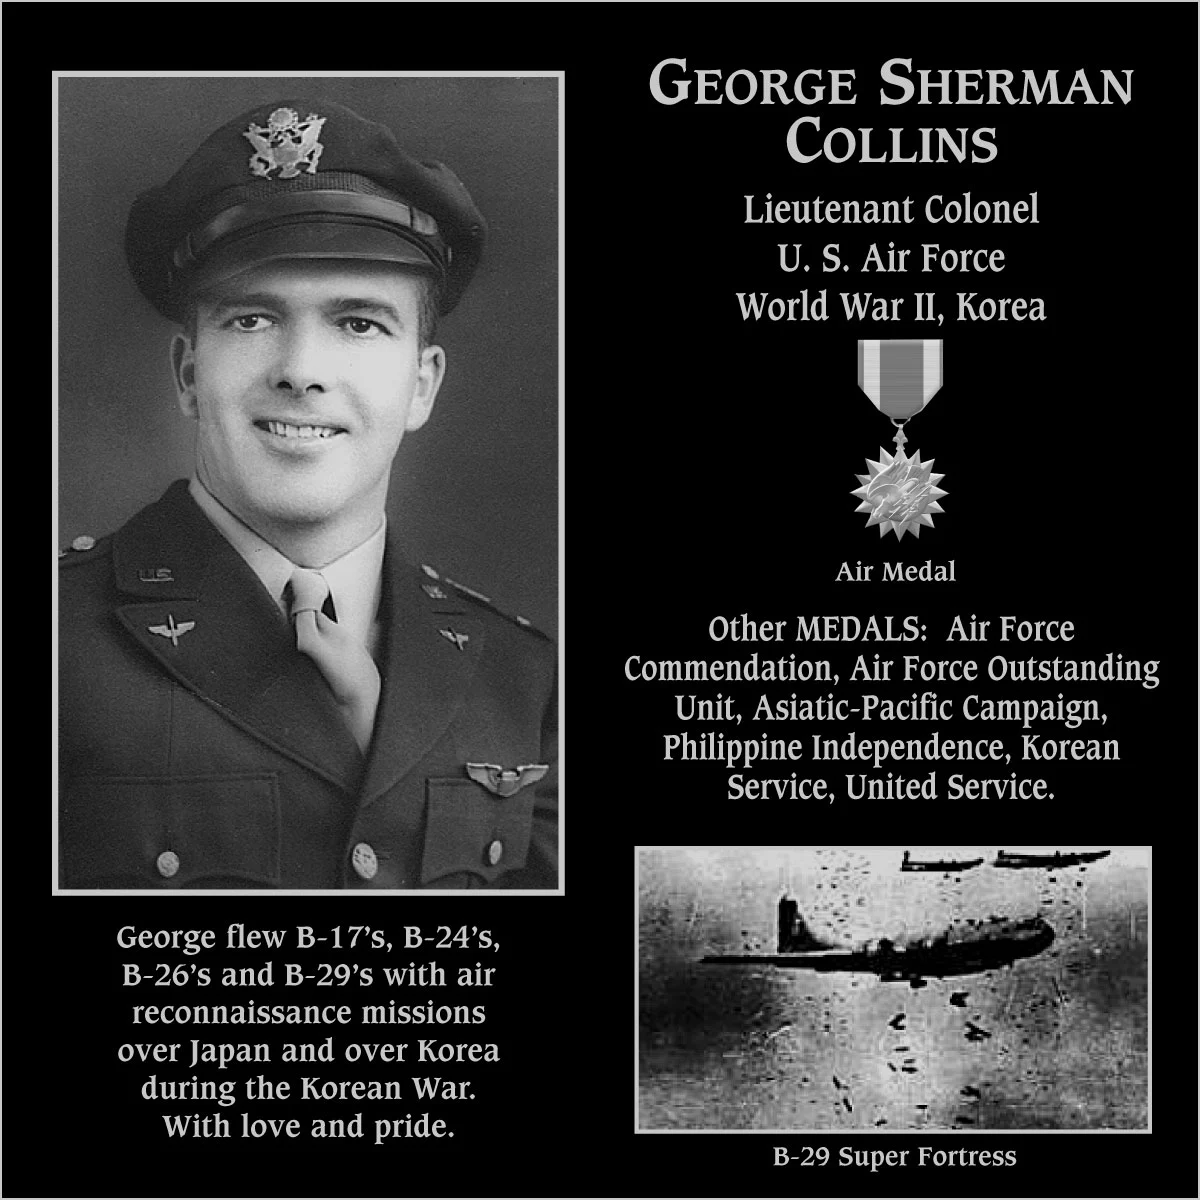 George Sherman Collins